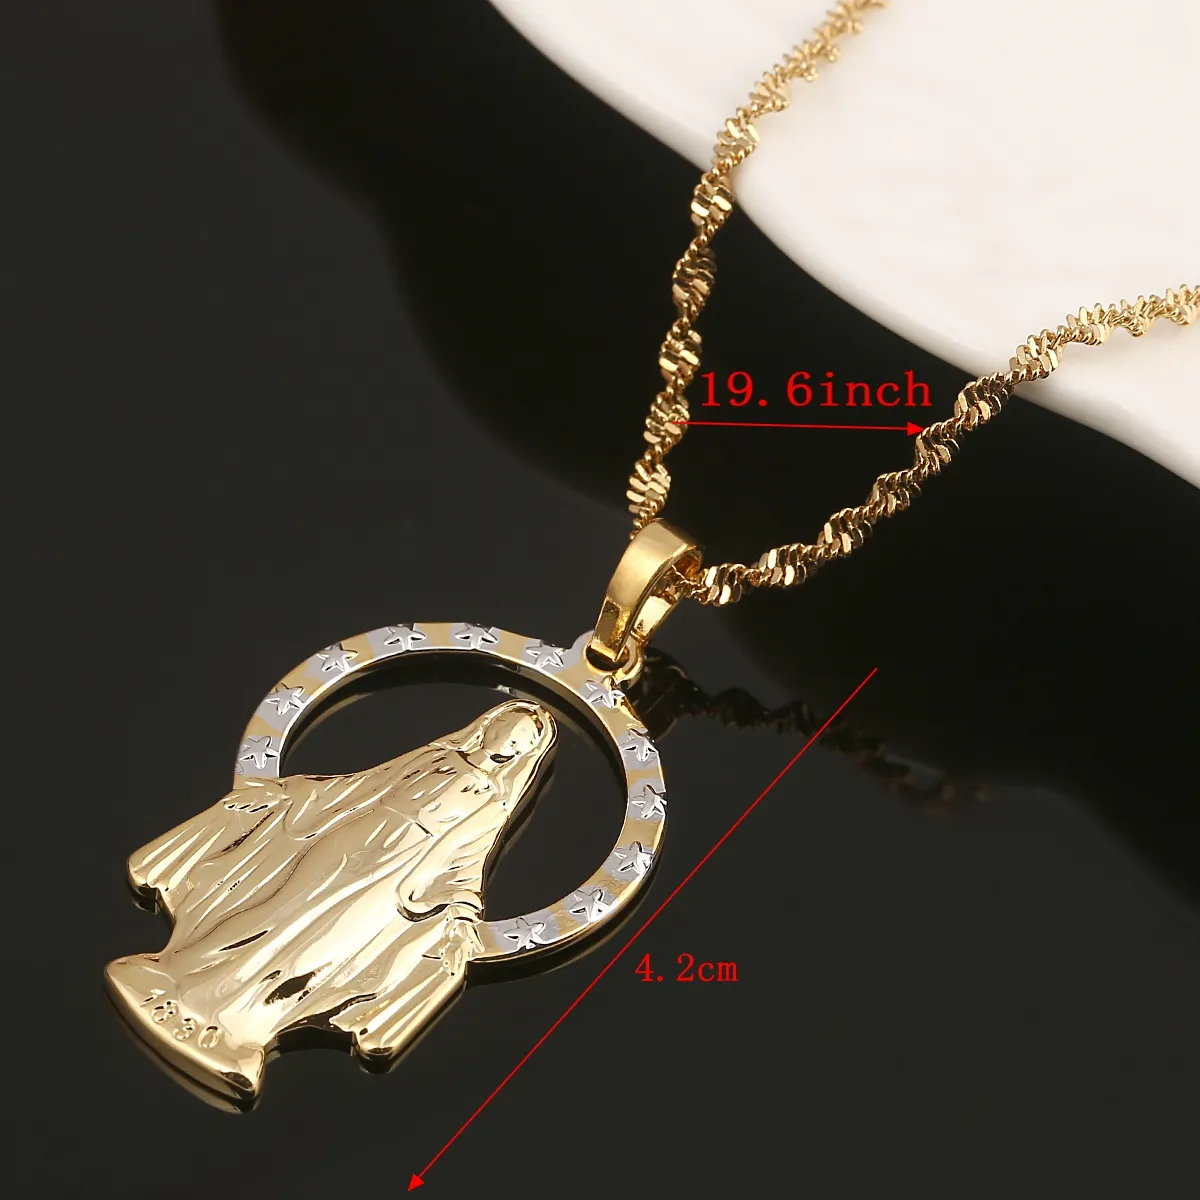 Women Virgin Mary Pendant Chain Necklace Overlay Religious Catholic Jewelry  Gift | eBay